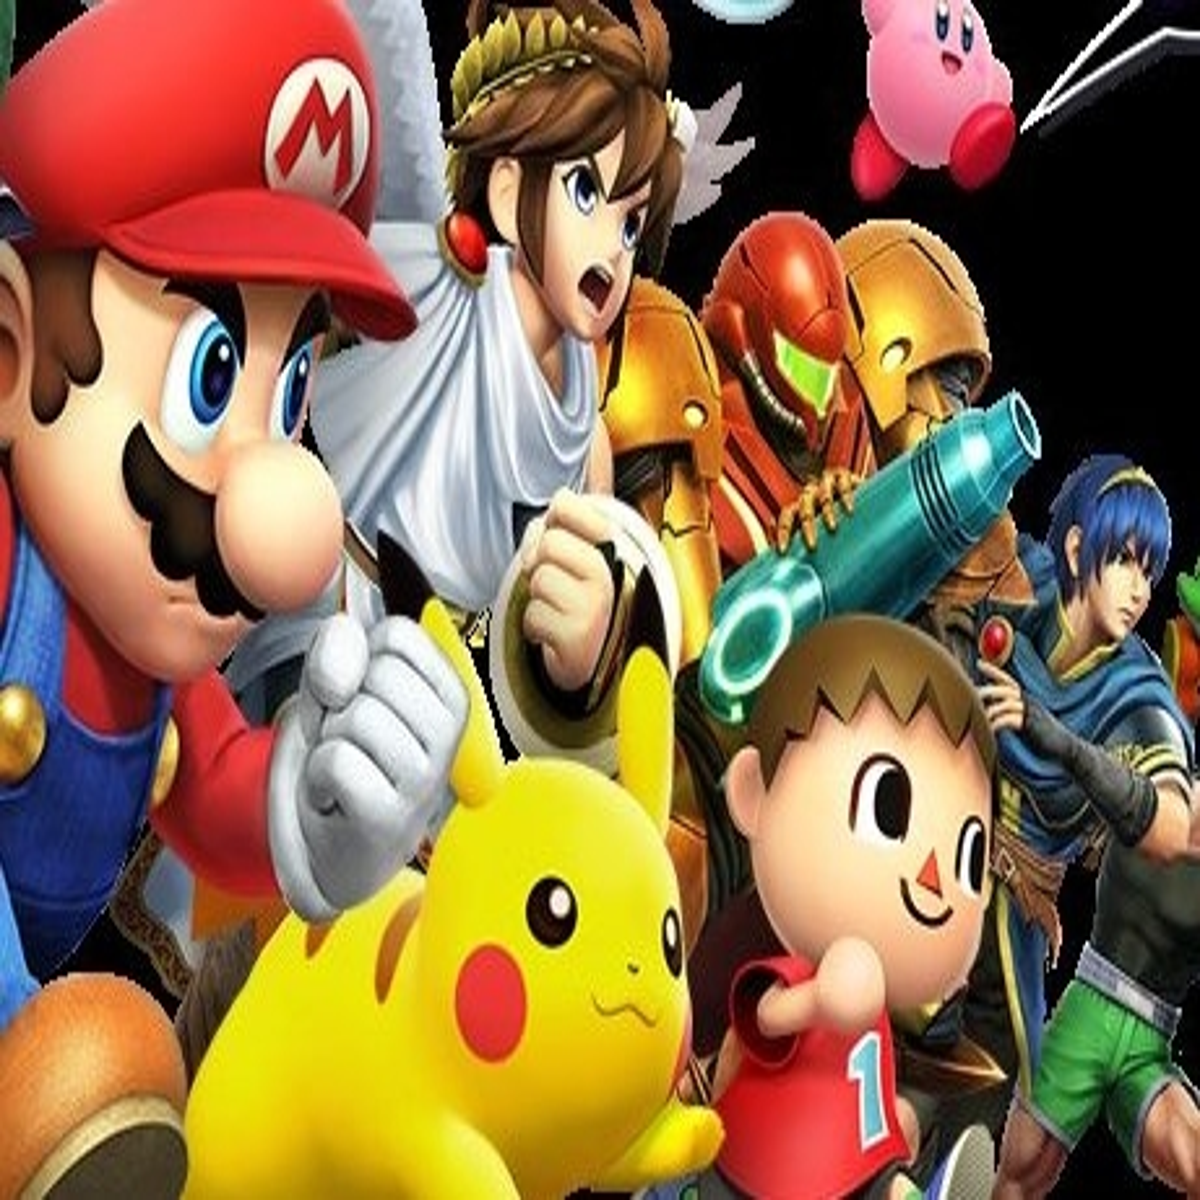 100+] Super Smash Bros Ultimate Wallpapers